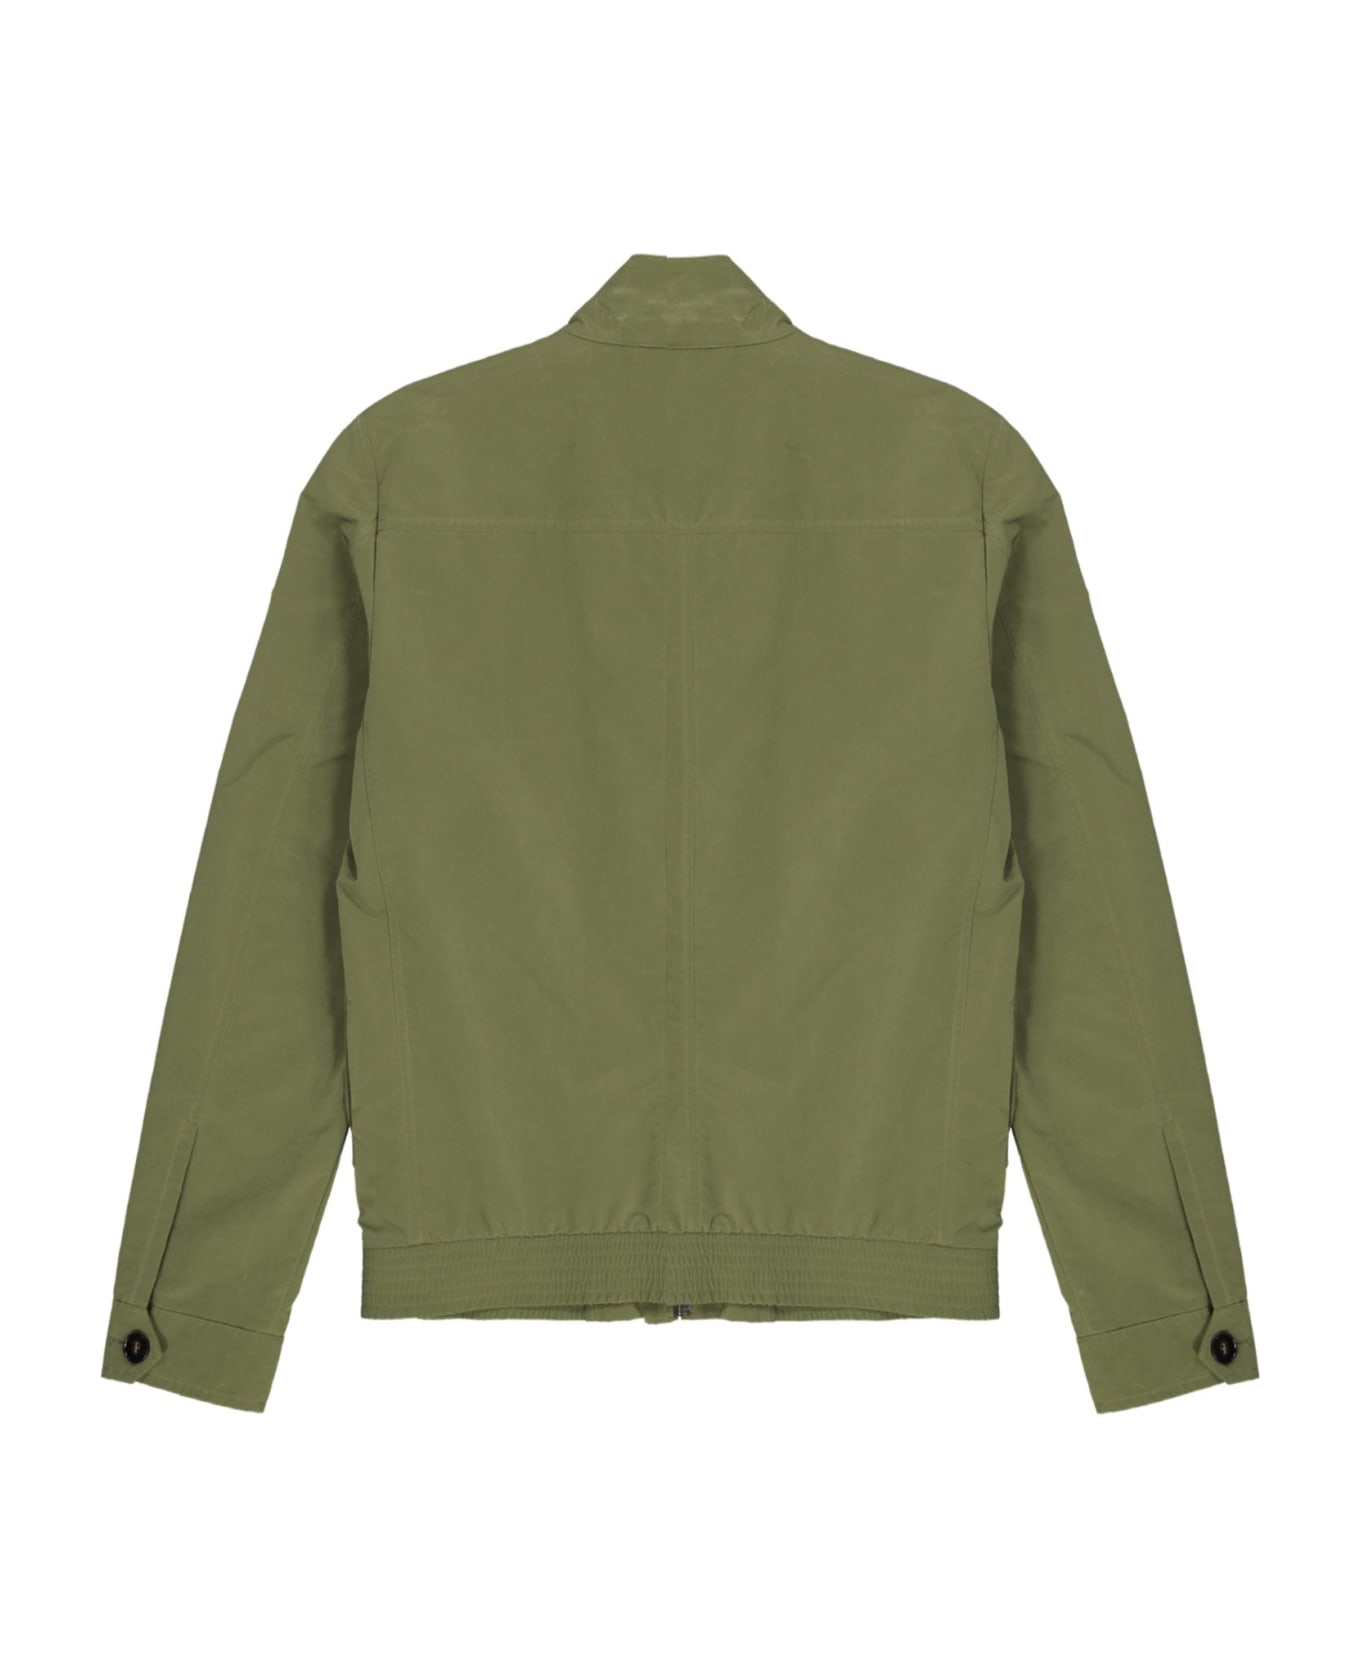 Gucci Lightweight Jacket - Green ジャケット